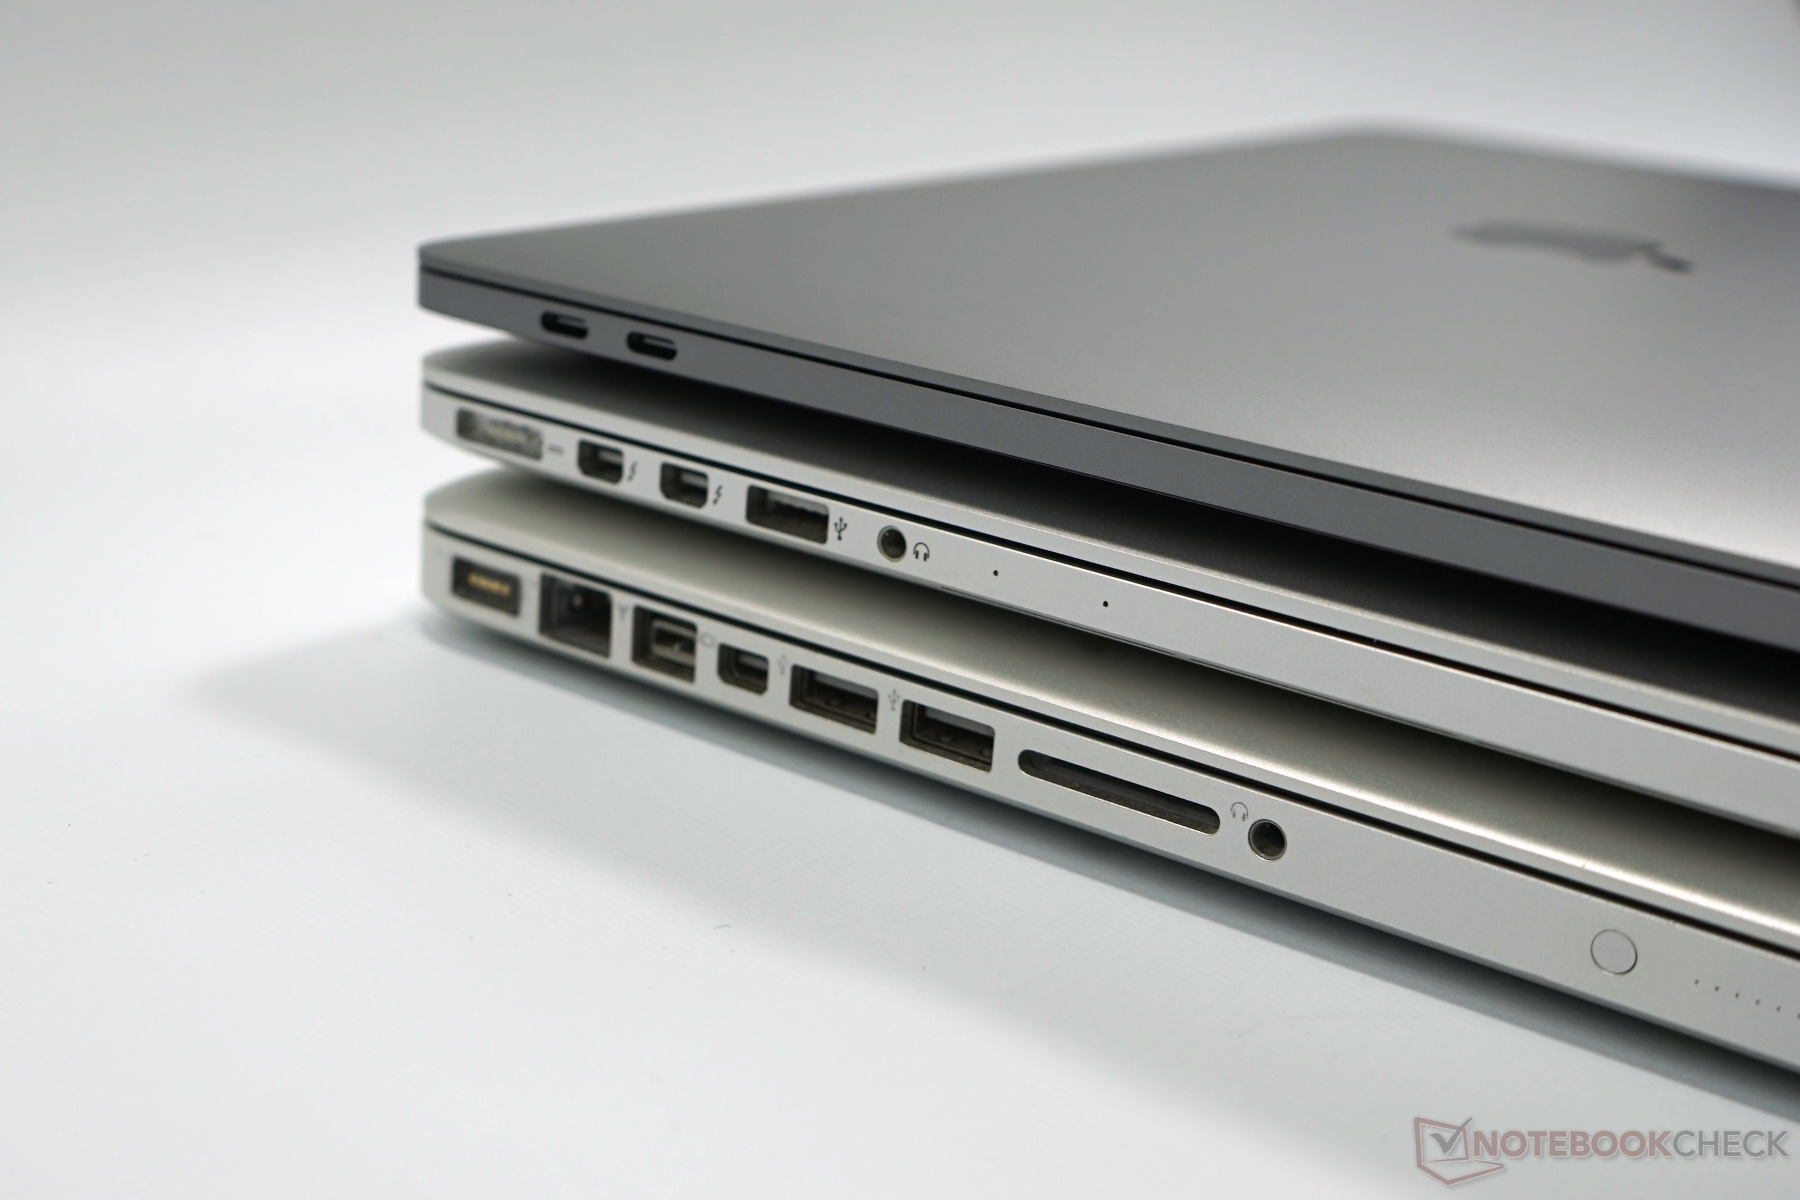 Apple MacBook Pro 13-Inch (2017) Review